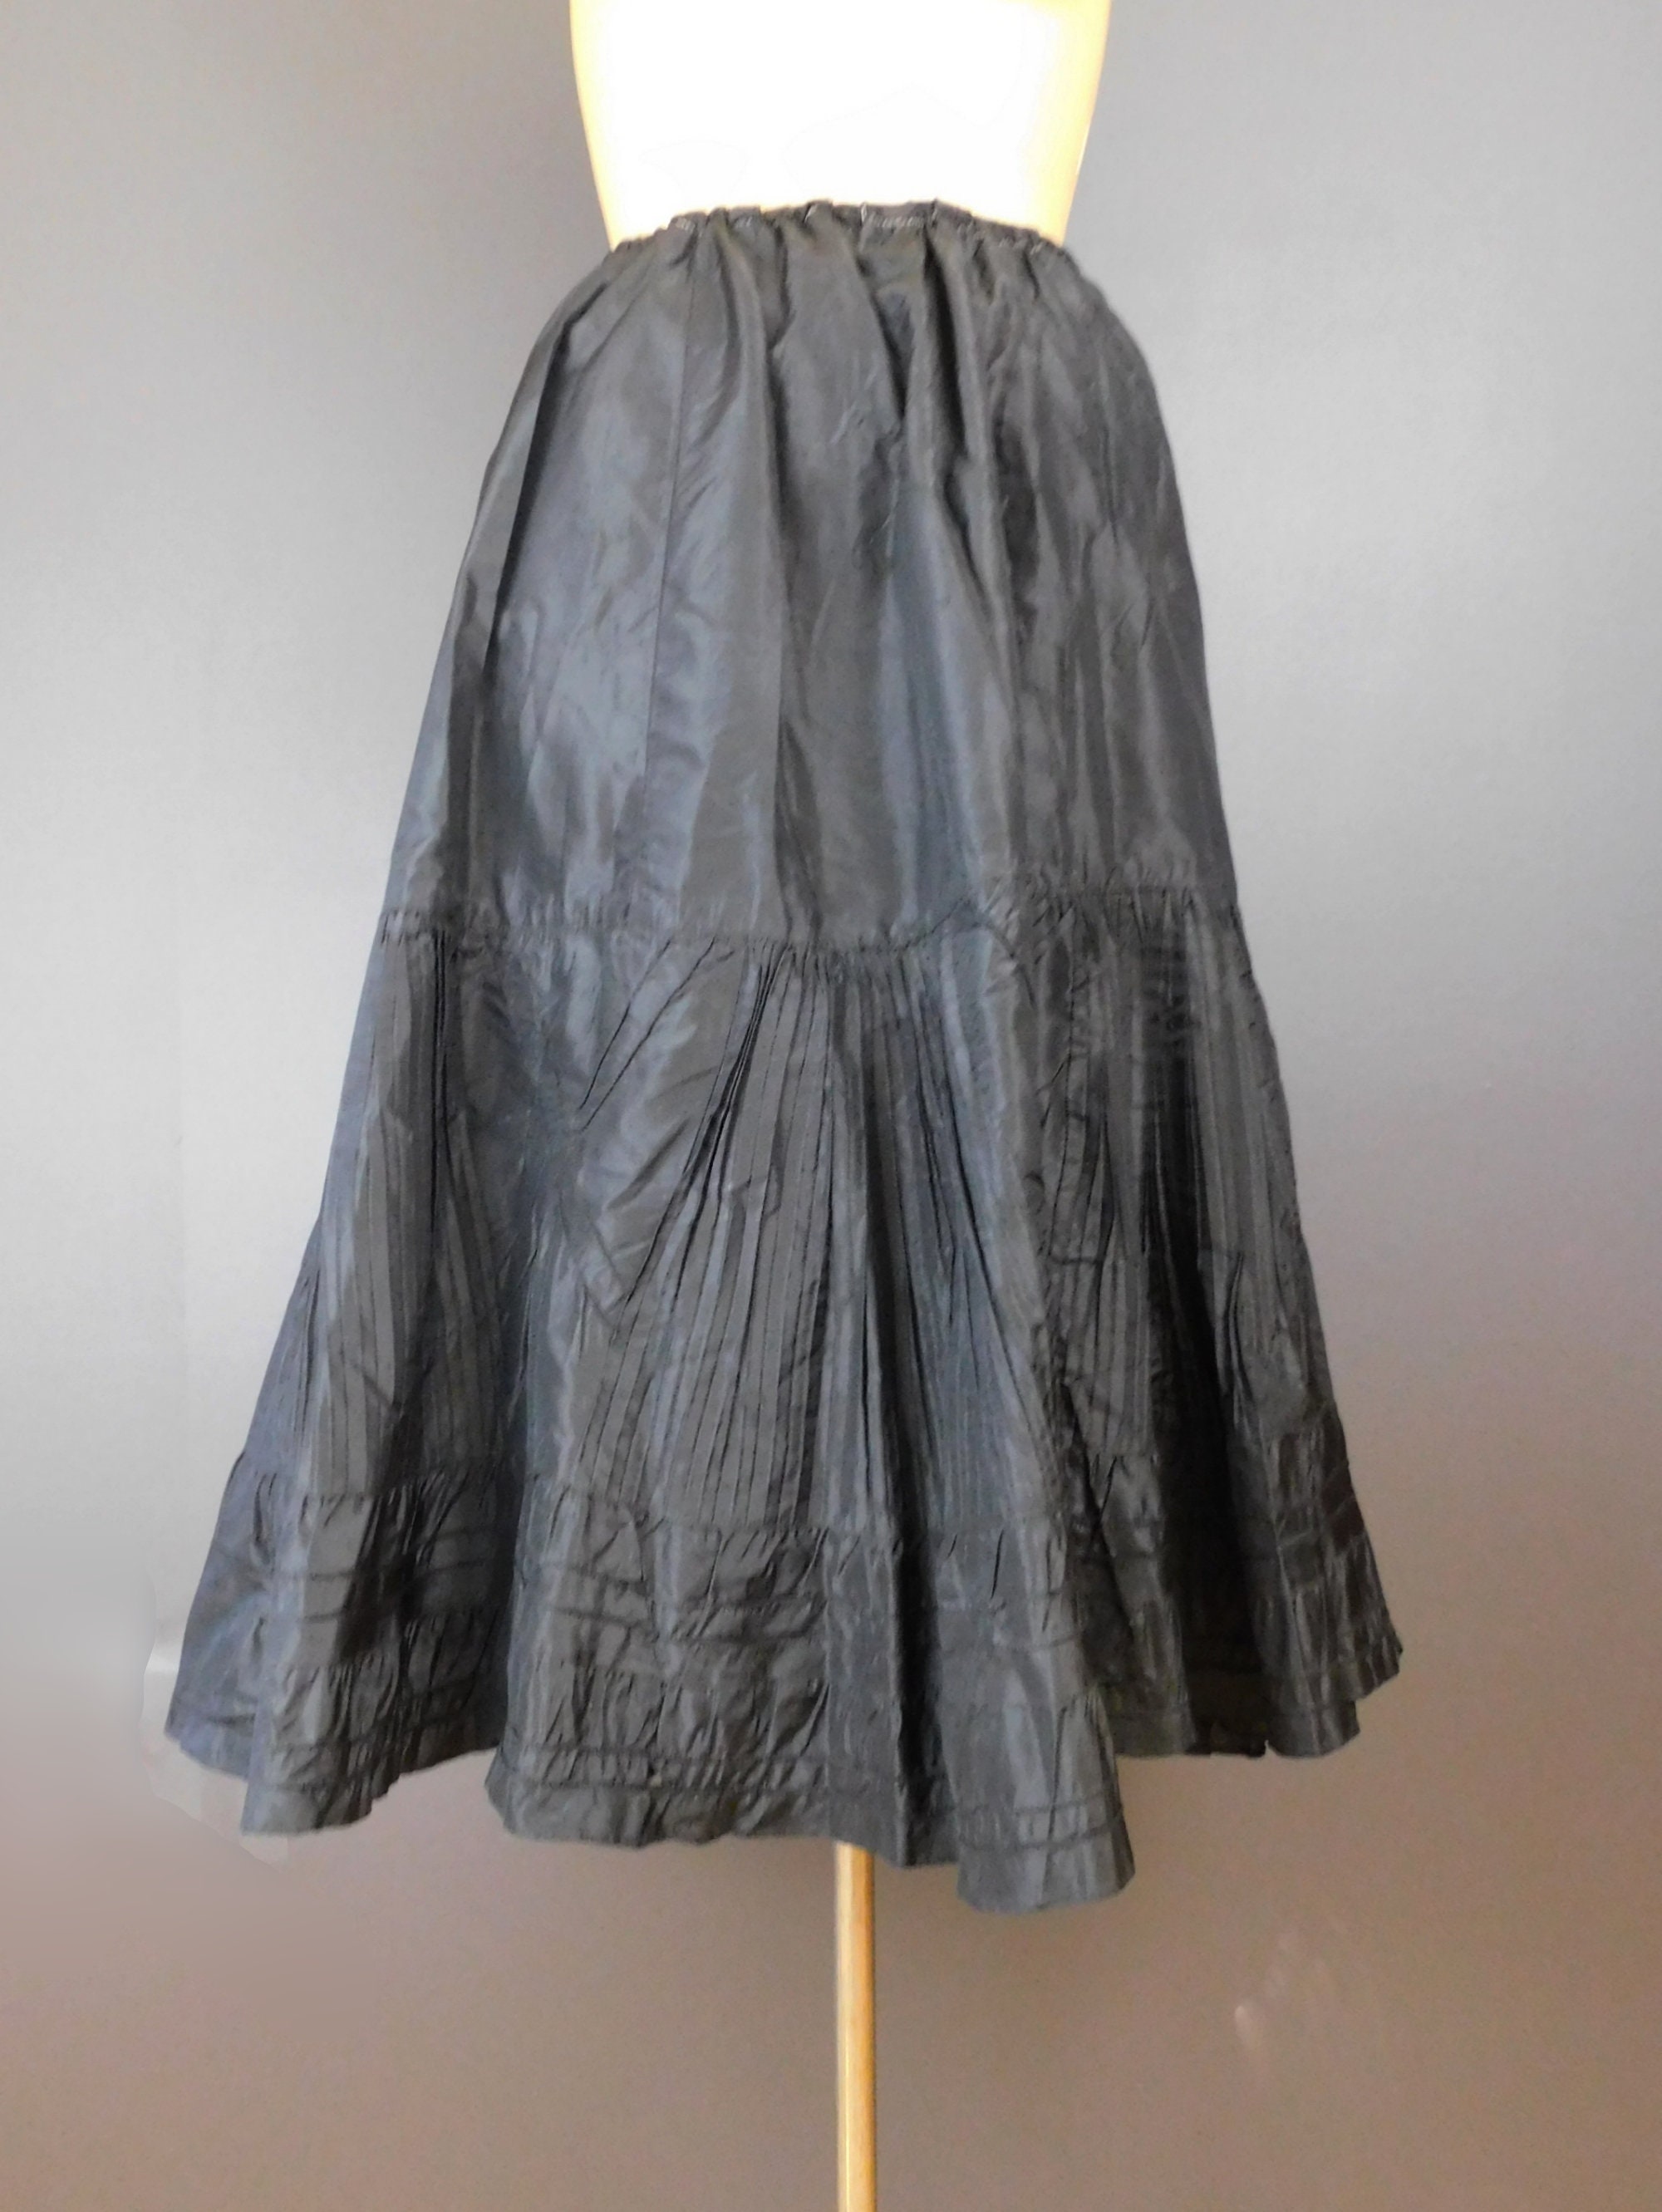 With Issues Vintage Petticoat Victorian Black Silk Taffeta Skirt 1800s Elastic waist fits 24 to 28 inch waist